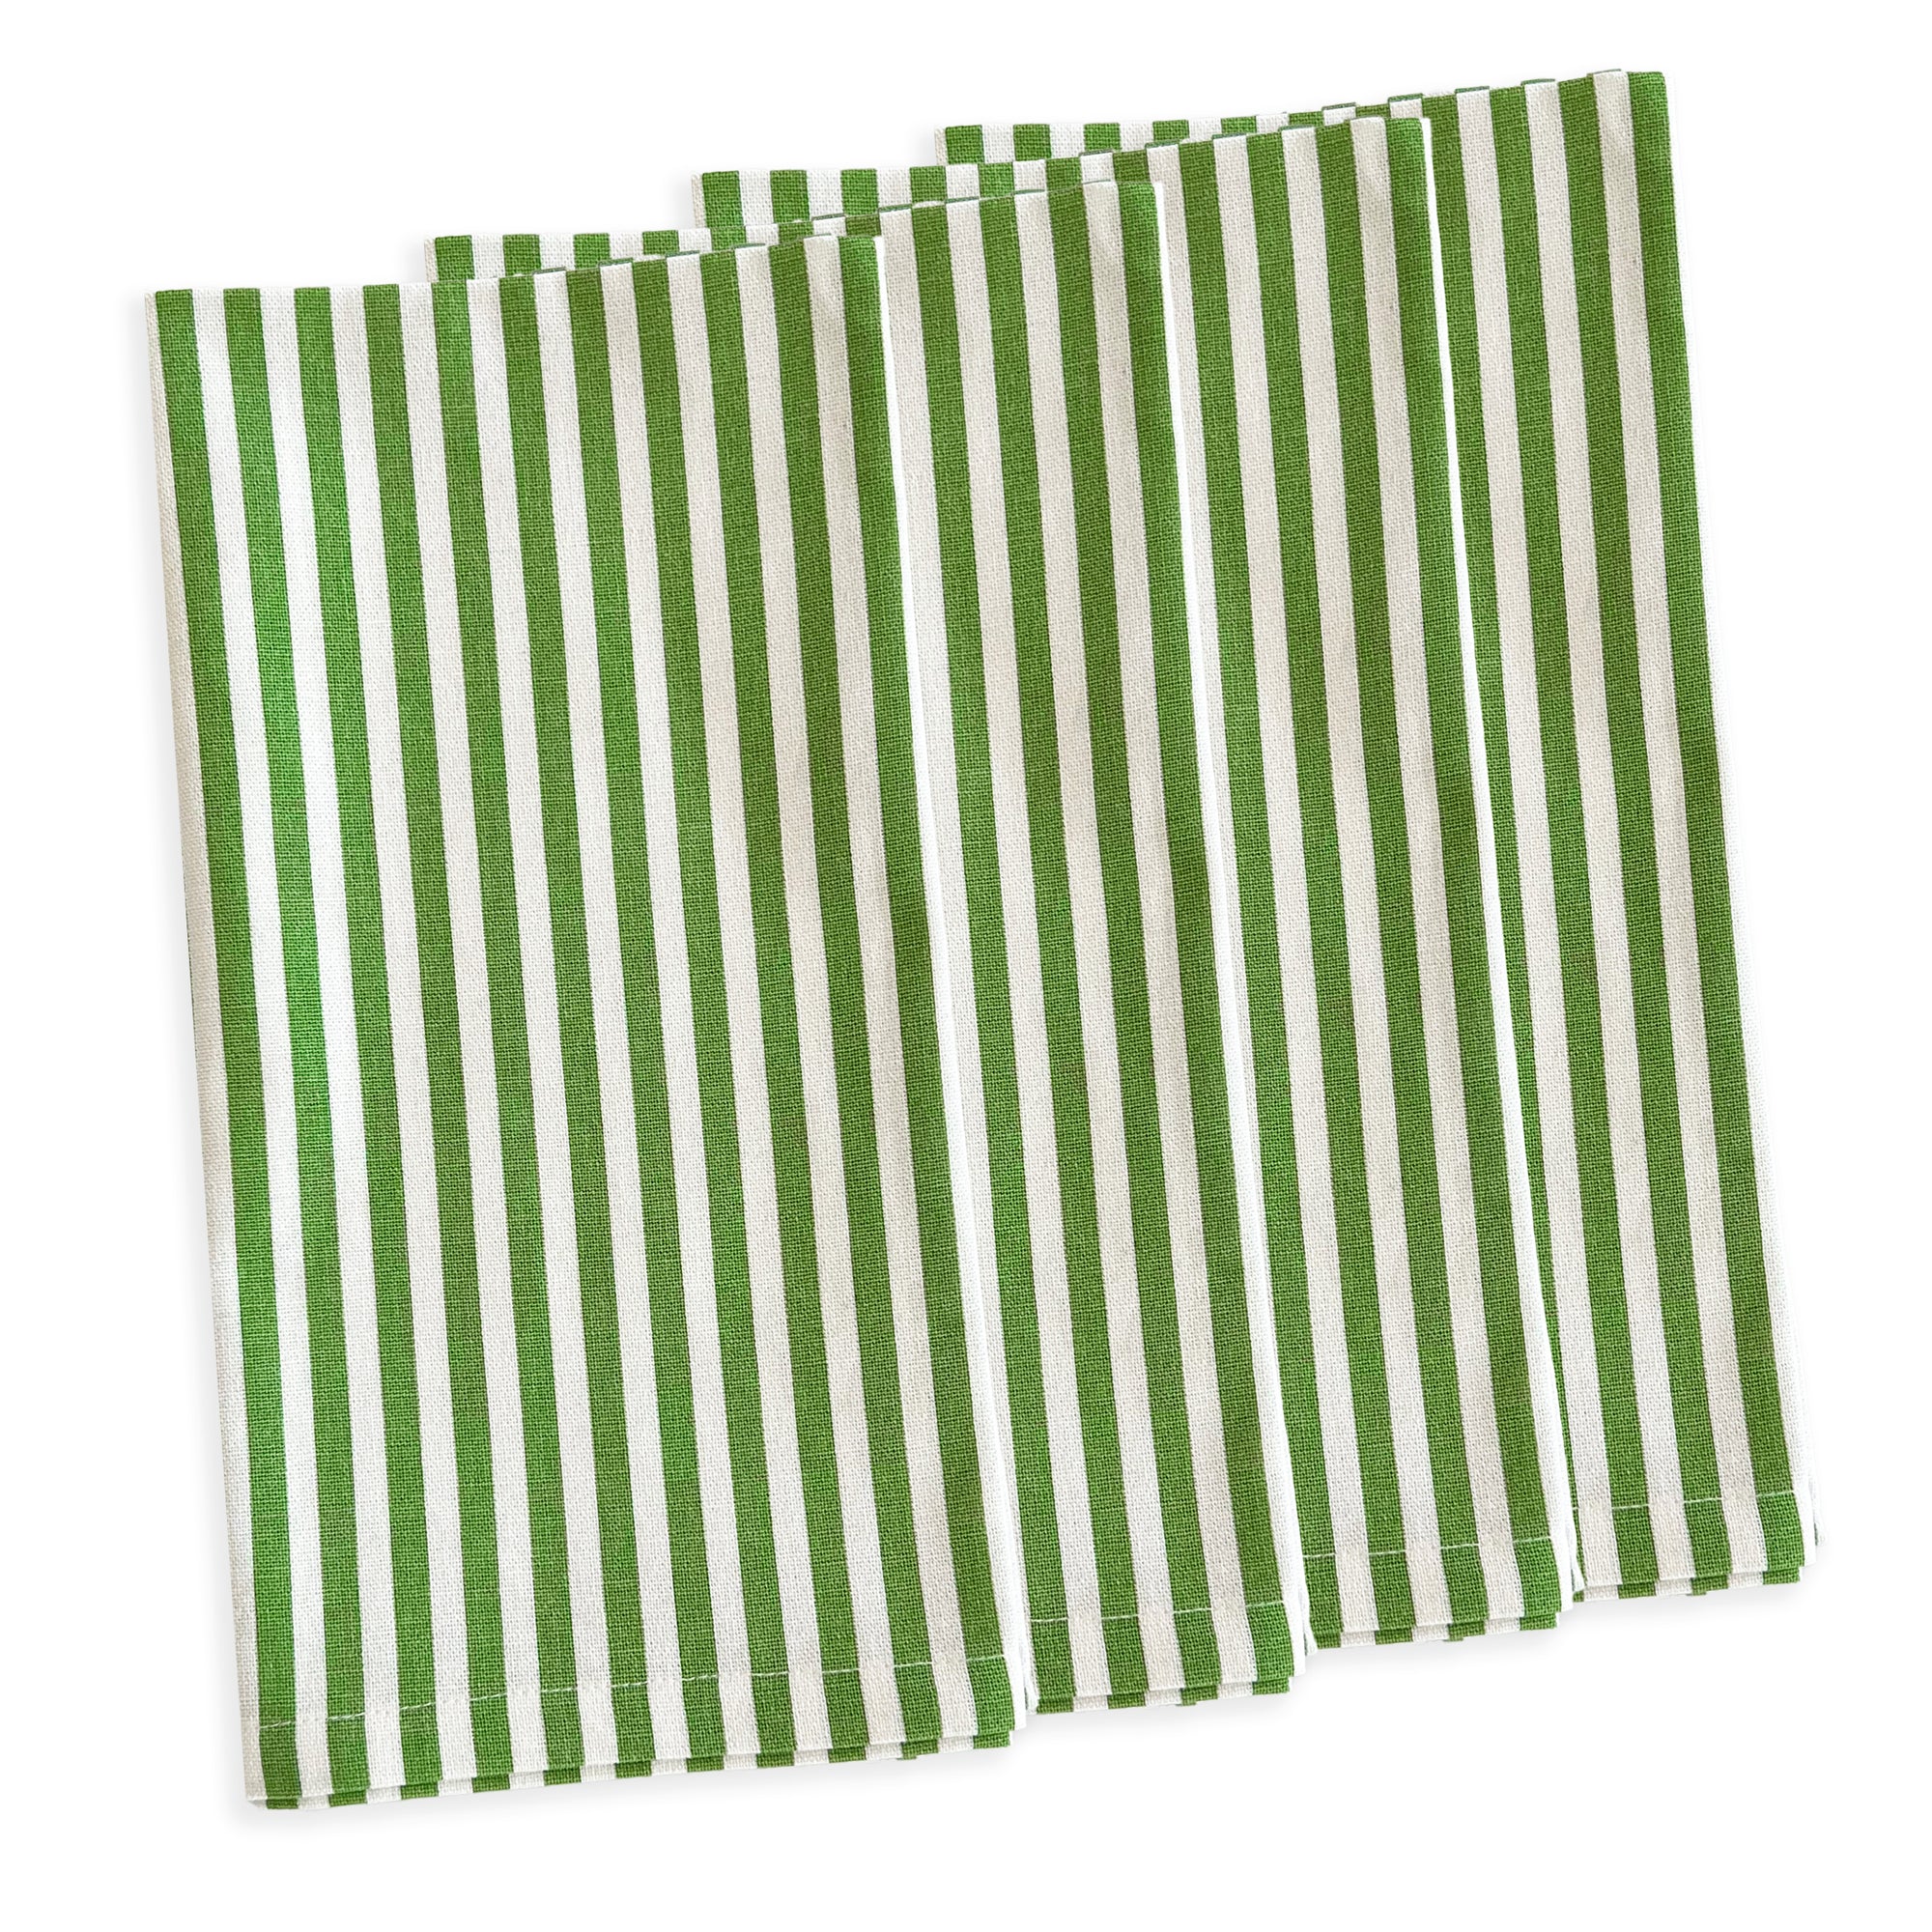 Pinstripe Oversized Dinner Napkin Set of 4 in bright spring green, made of 100% cotton from Caskata